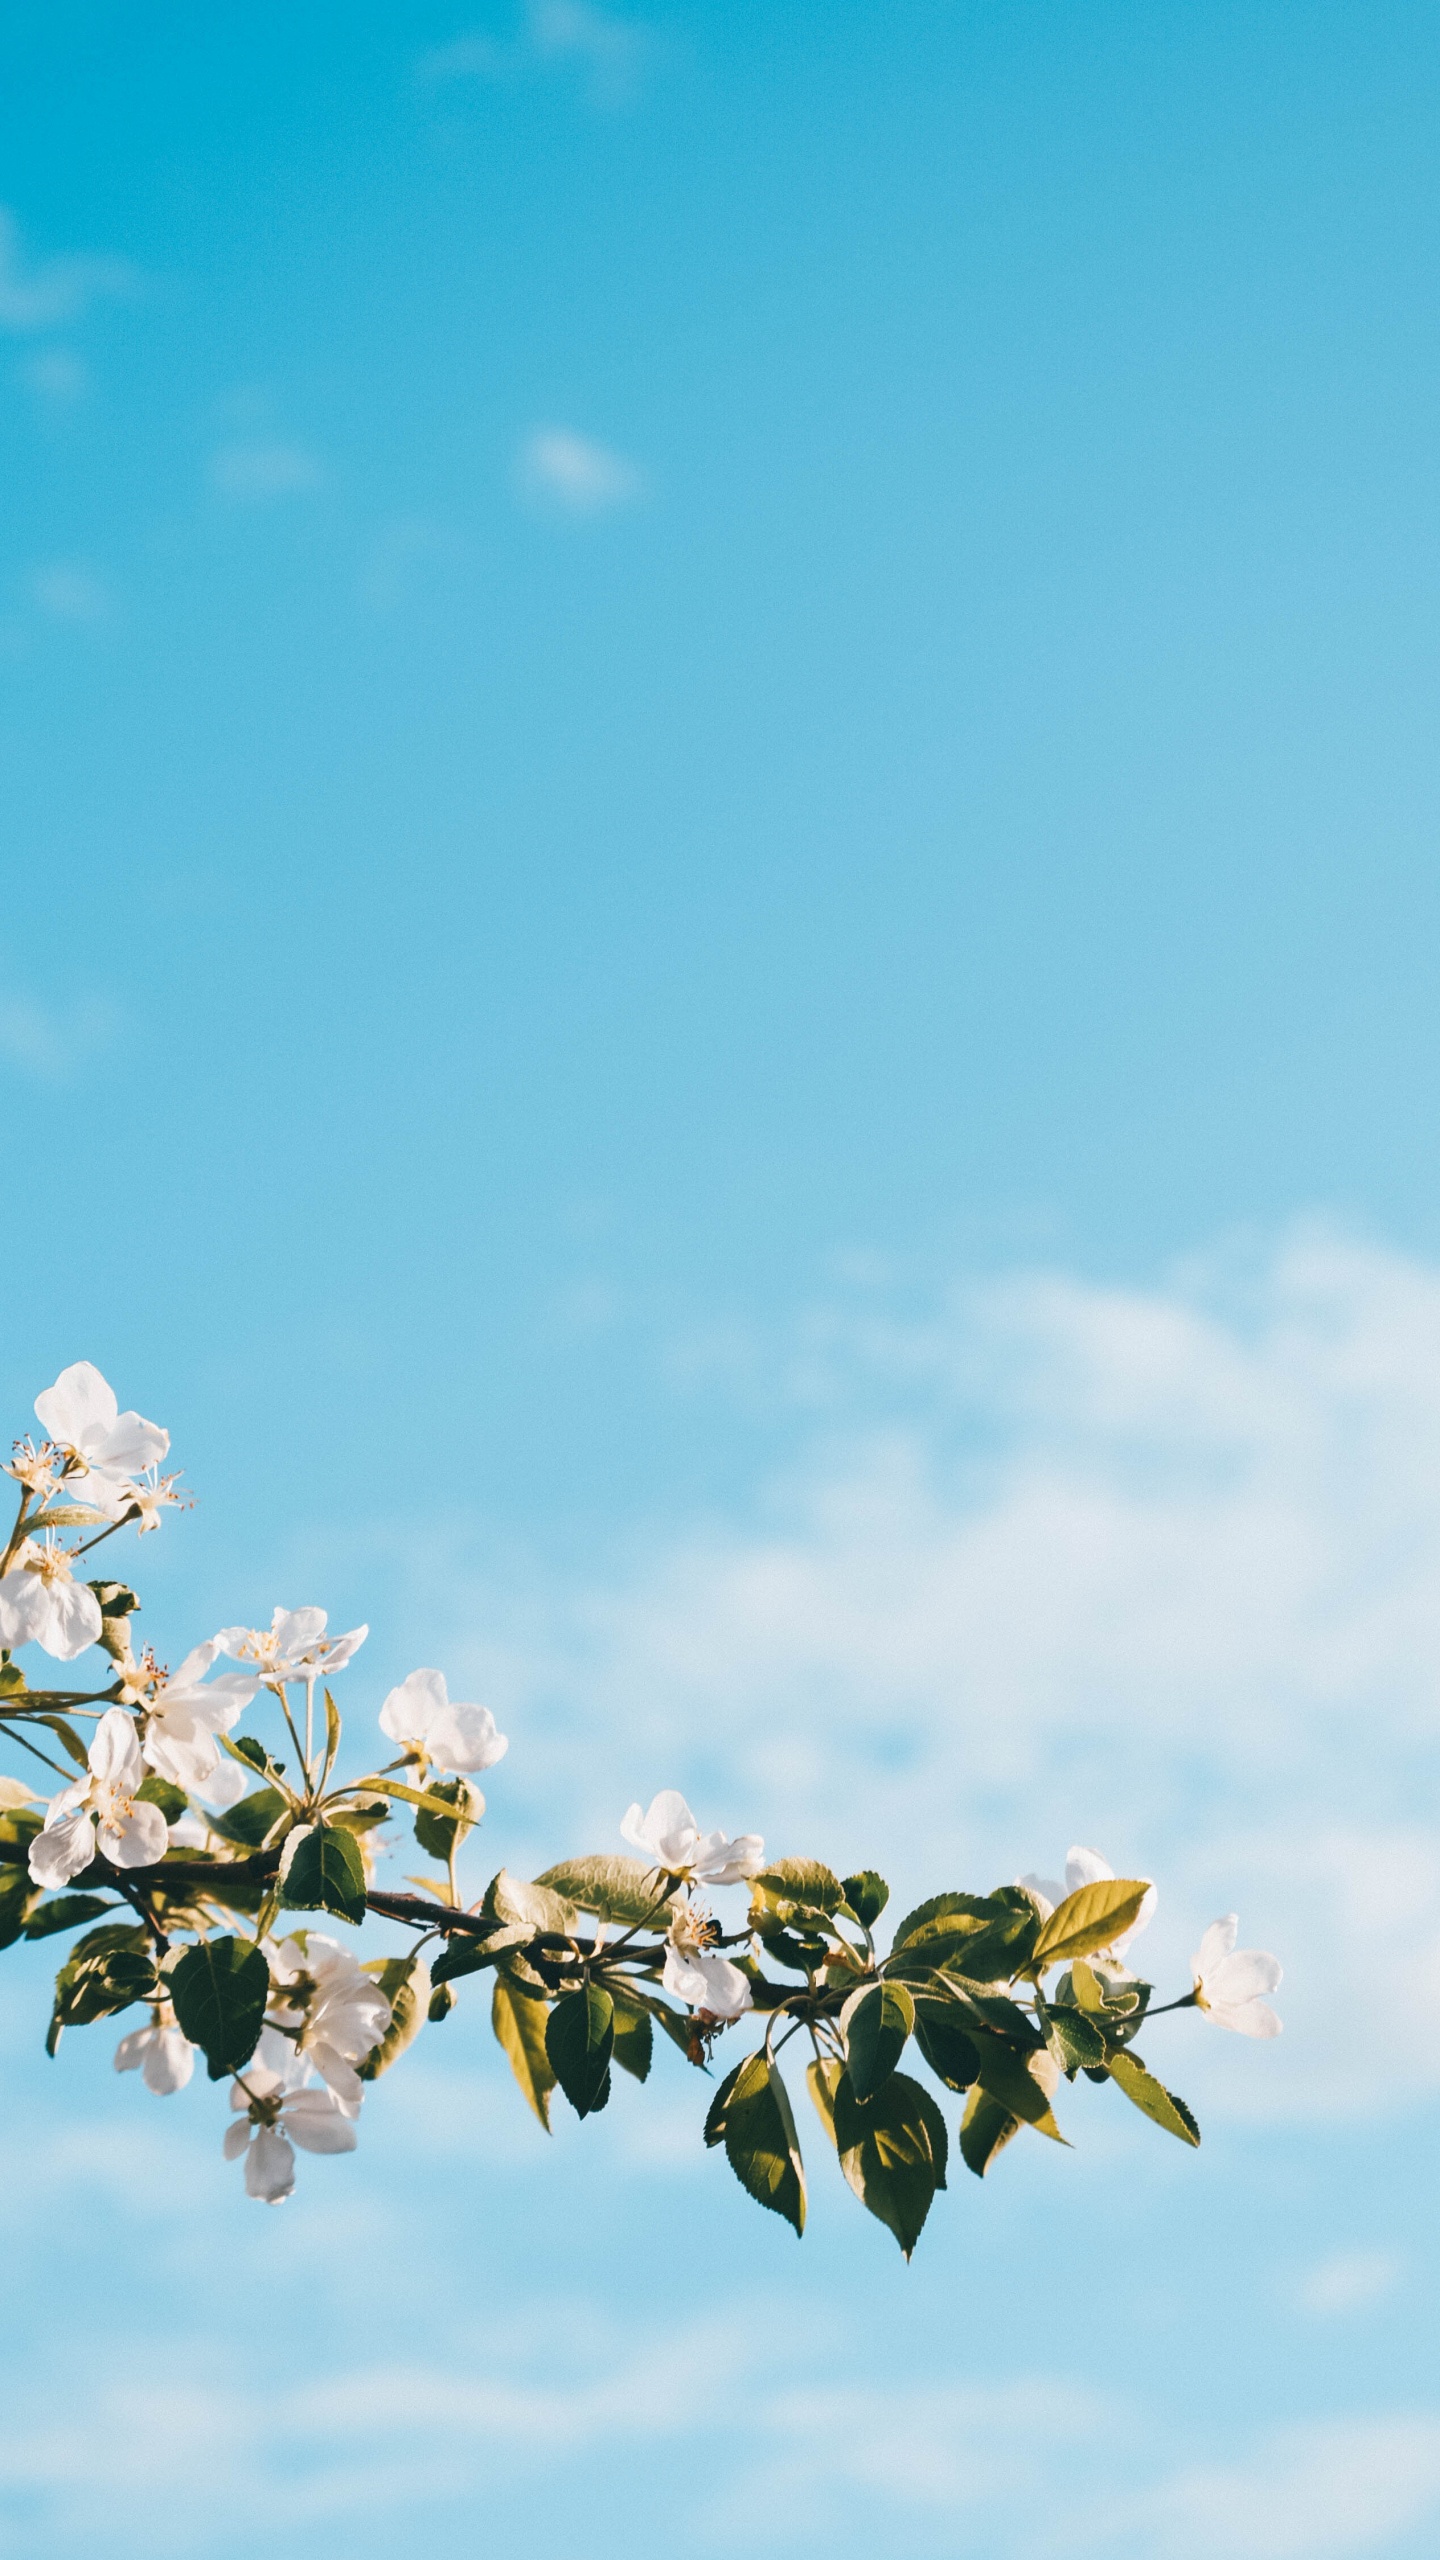 White Cherry Blossom Under Blue Sky During Daytime. Wallpaper in 1440x2560 Resolution